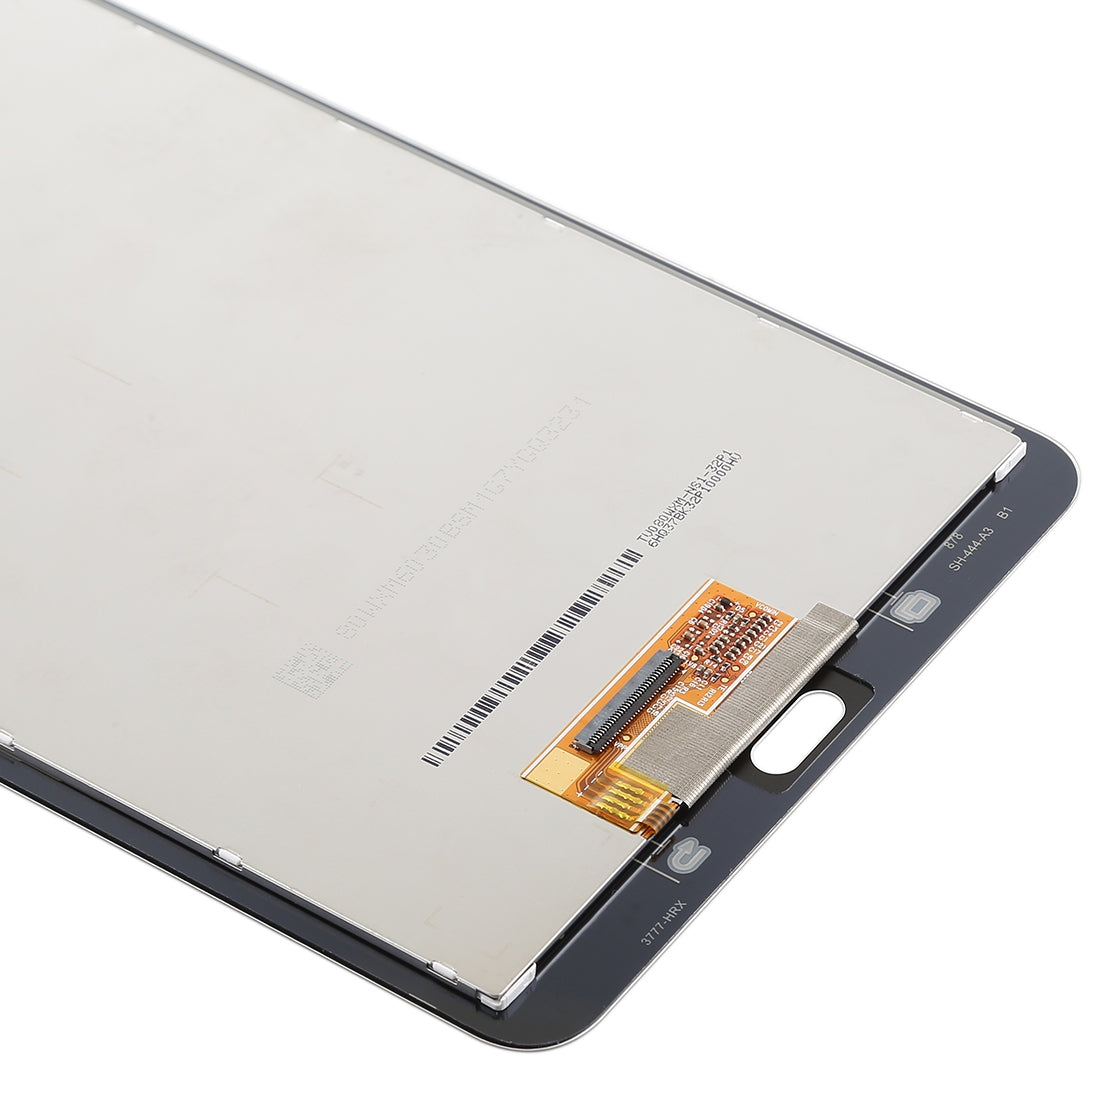 Pantalla LCD + Tactil Samsung Galaxy Tab E 8.0 T3777 (Versión 3G) Blanco